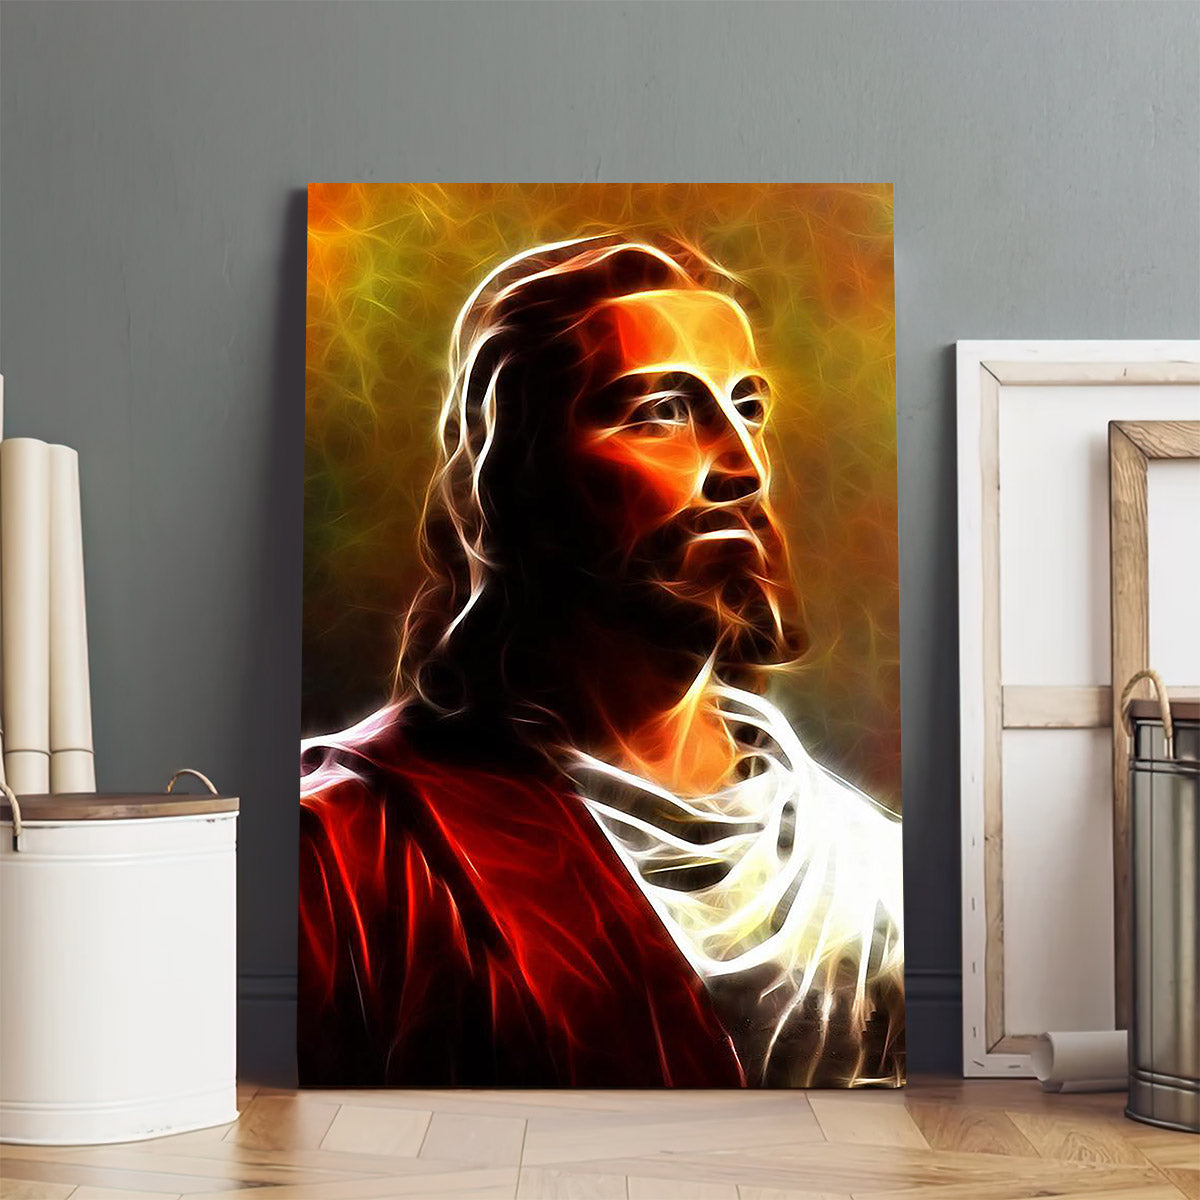 Jesus Portrait Canvas Pictures - Christian Canvas Wall Decor - Religious Wall Art Canvas